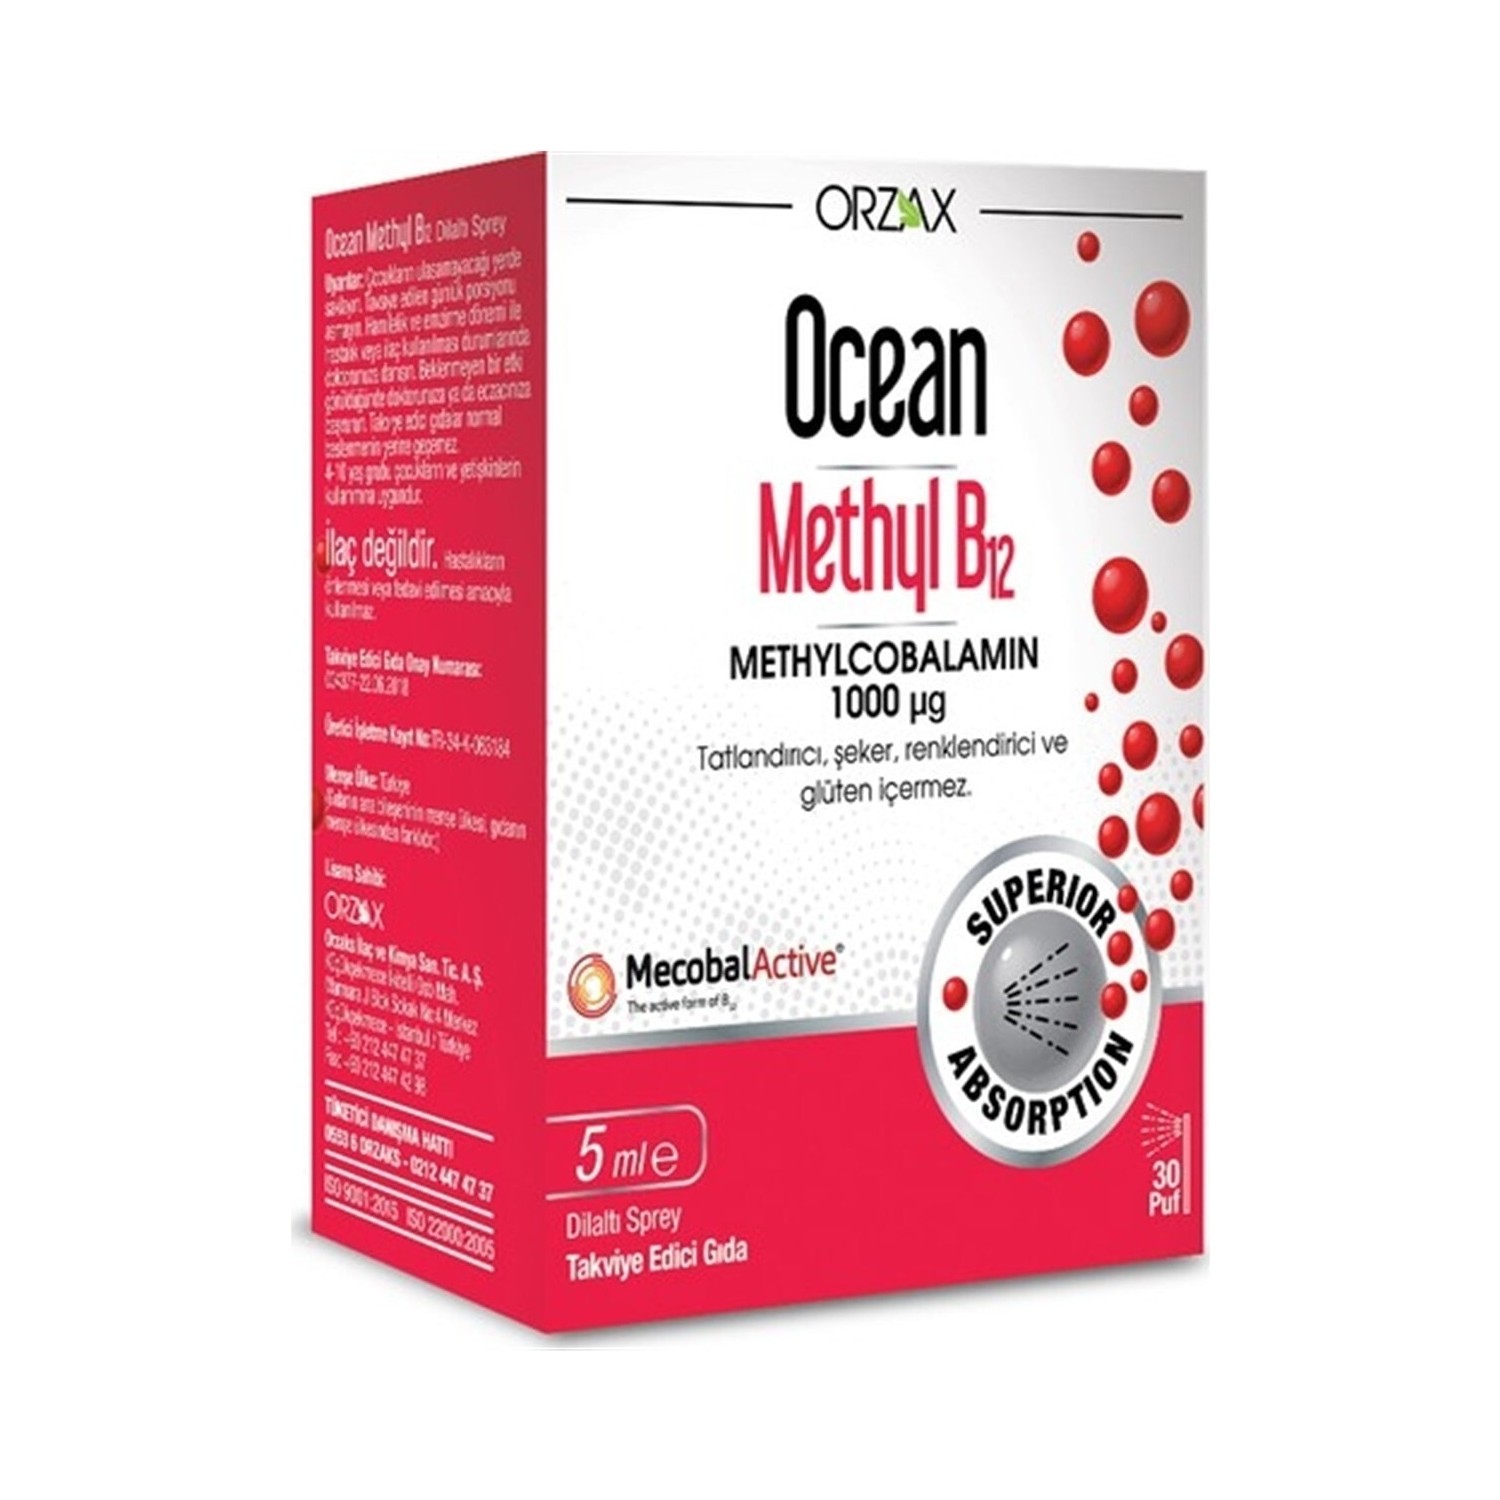 Подъязычный спрей Ocean Methyl B12, 10 мл allnutrition b12 methyl drops krople жидкий витамин b12 30 ml